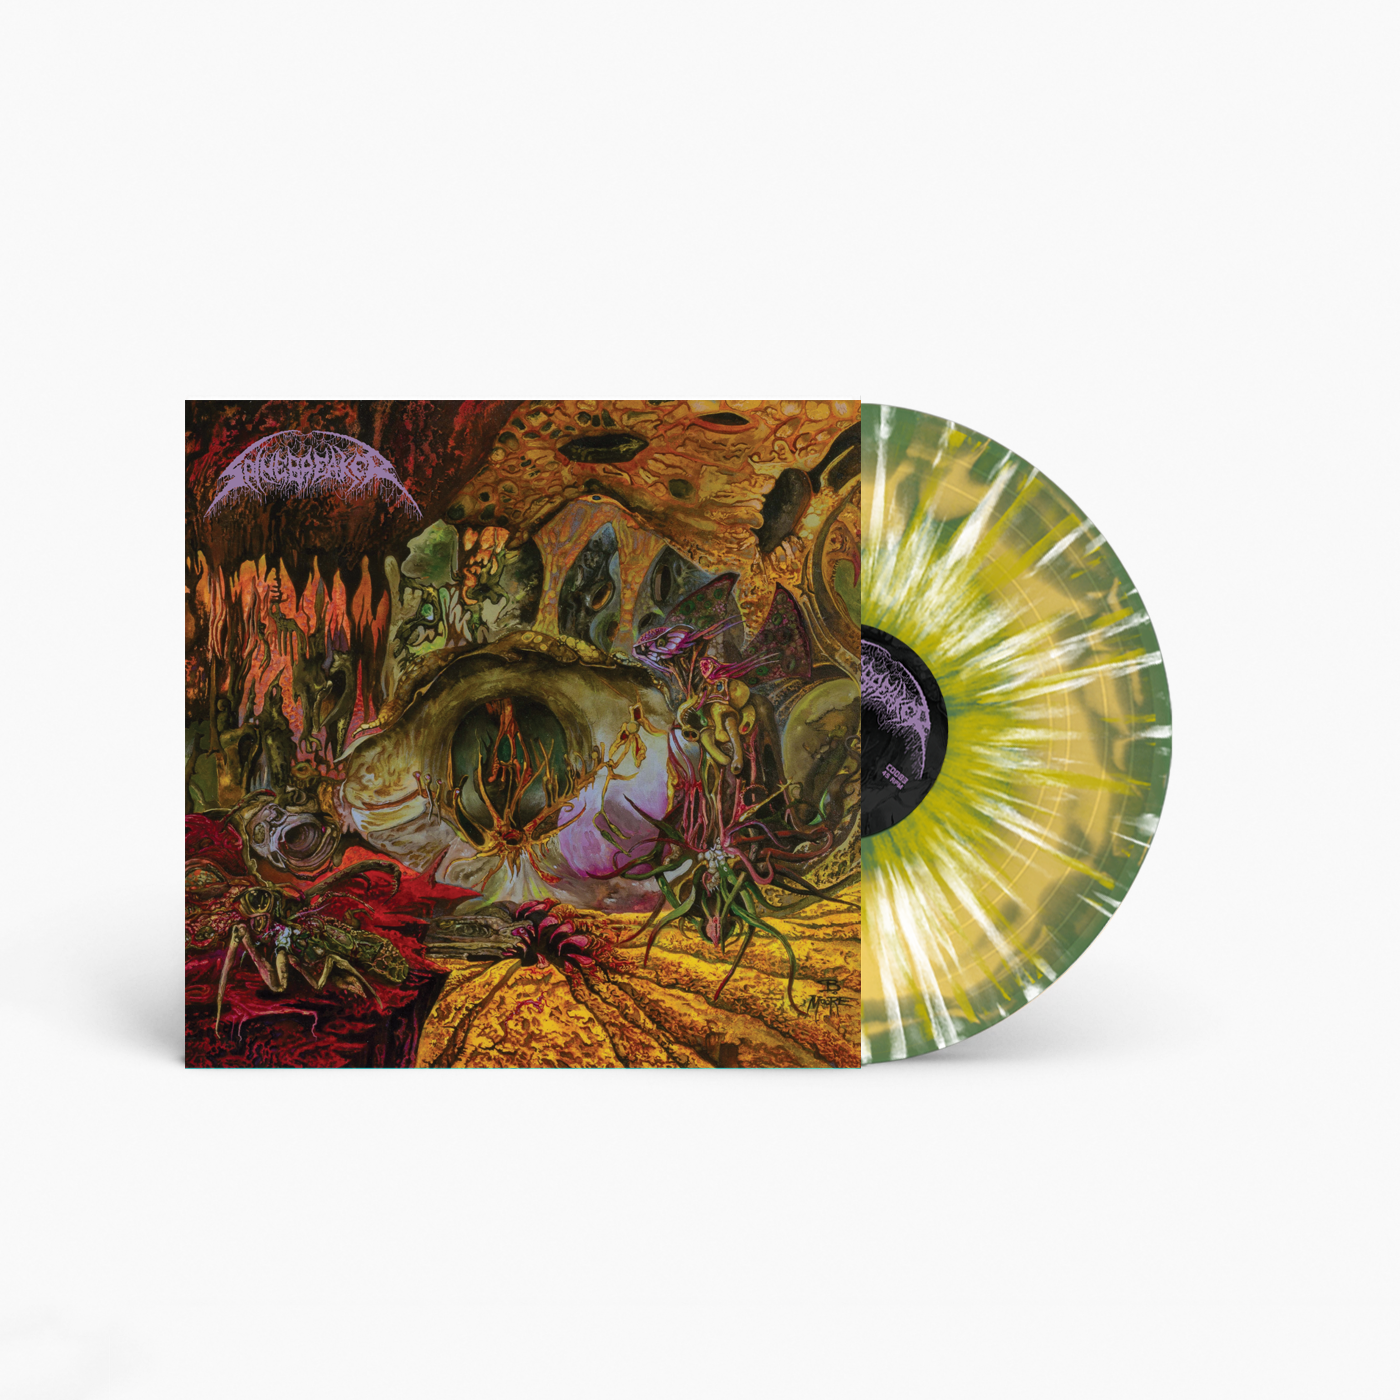 Spinebreaker "Cavern of Inoculated Cognition" 12" EP (Green/Yellow Swirl w/ Splatter)